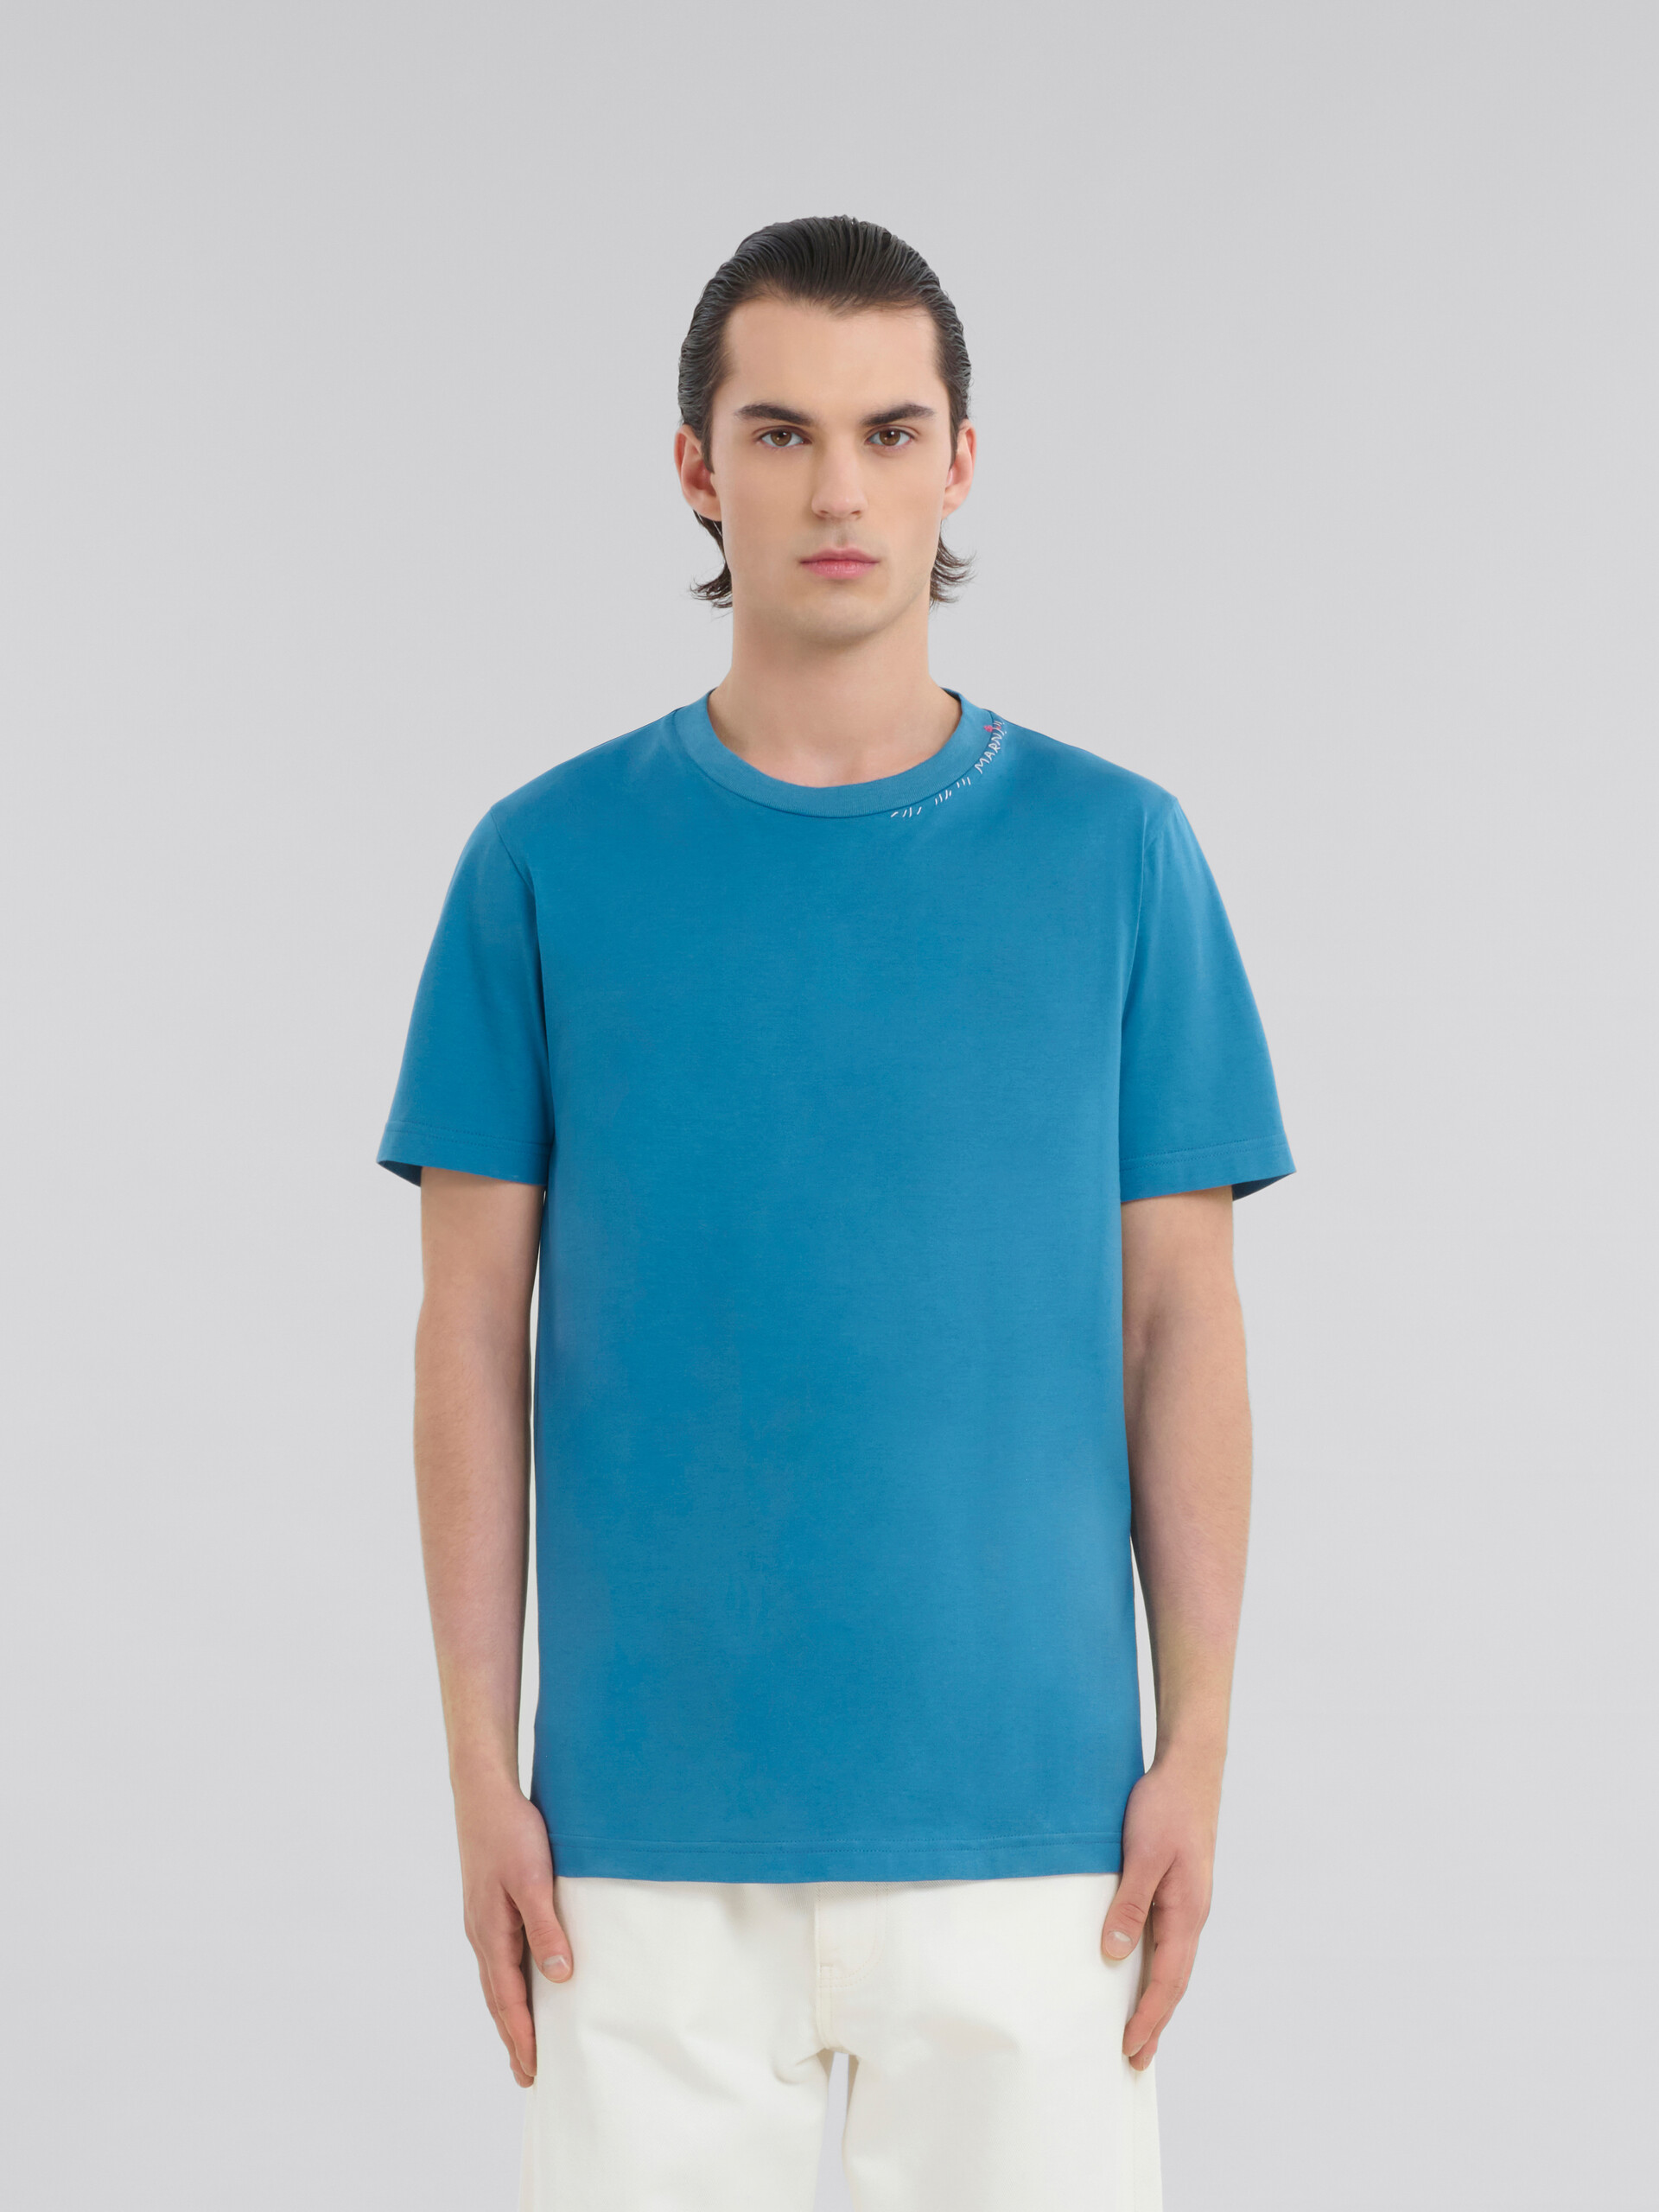 T-shirt in cotone blu con stampa nera a fiori - T-shirt - Image 2